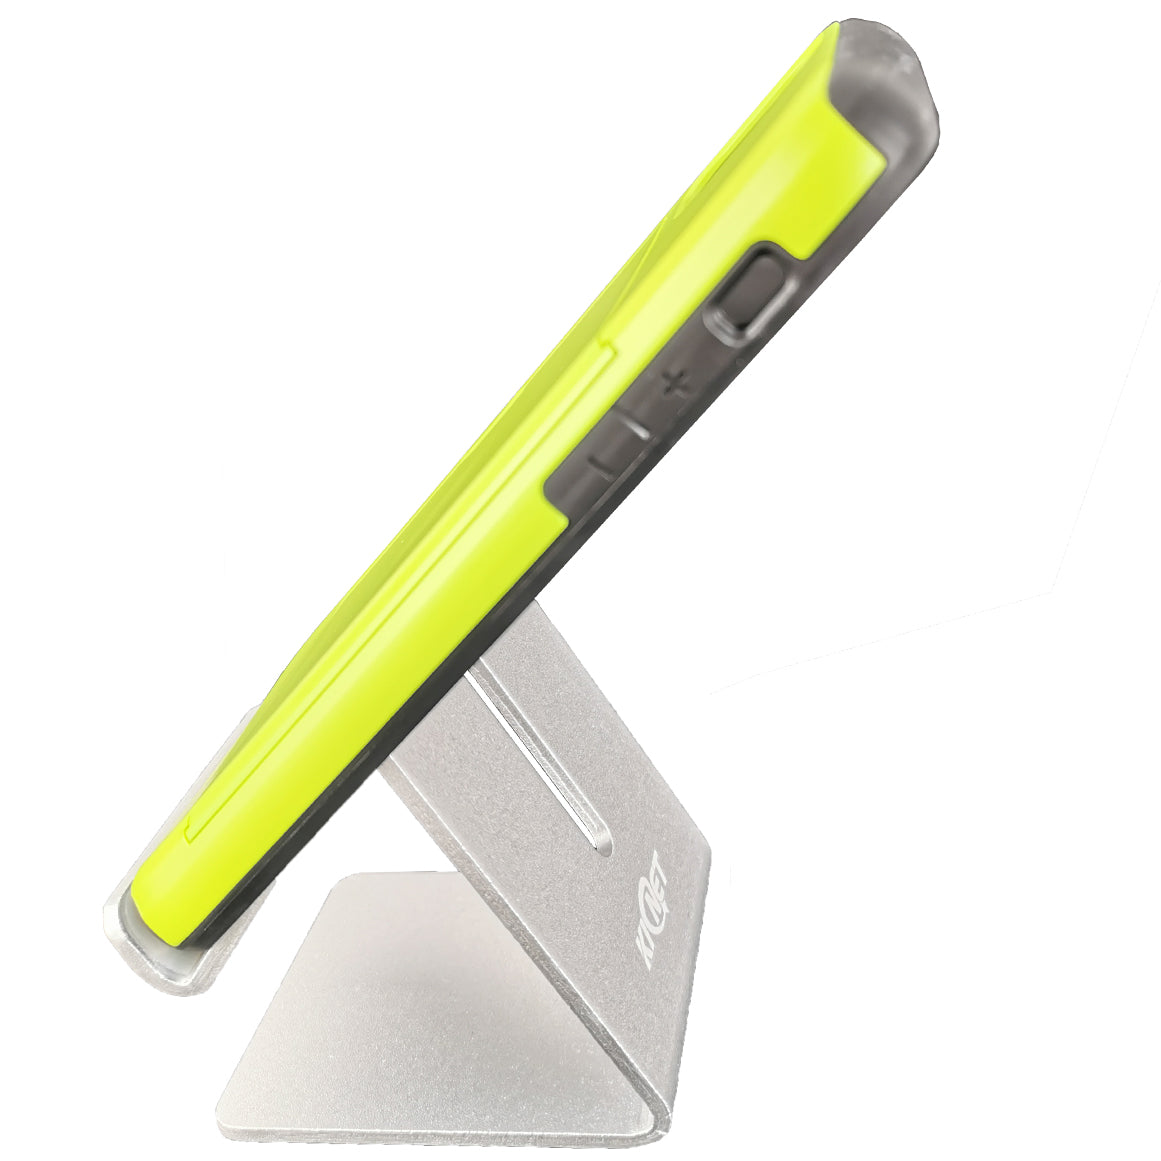 Aluminum Alloy Universal Desk Stand Holder For Mobile Phone Tablet